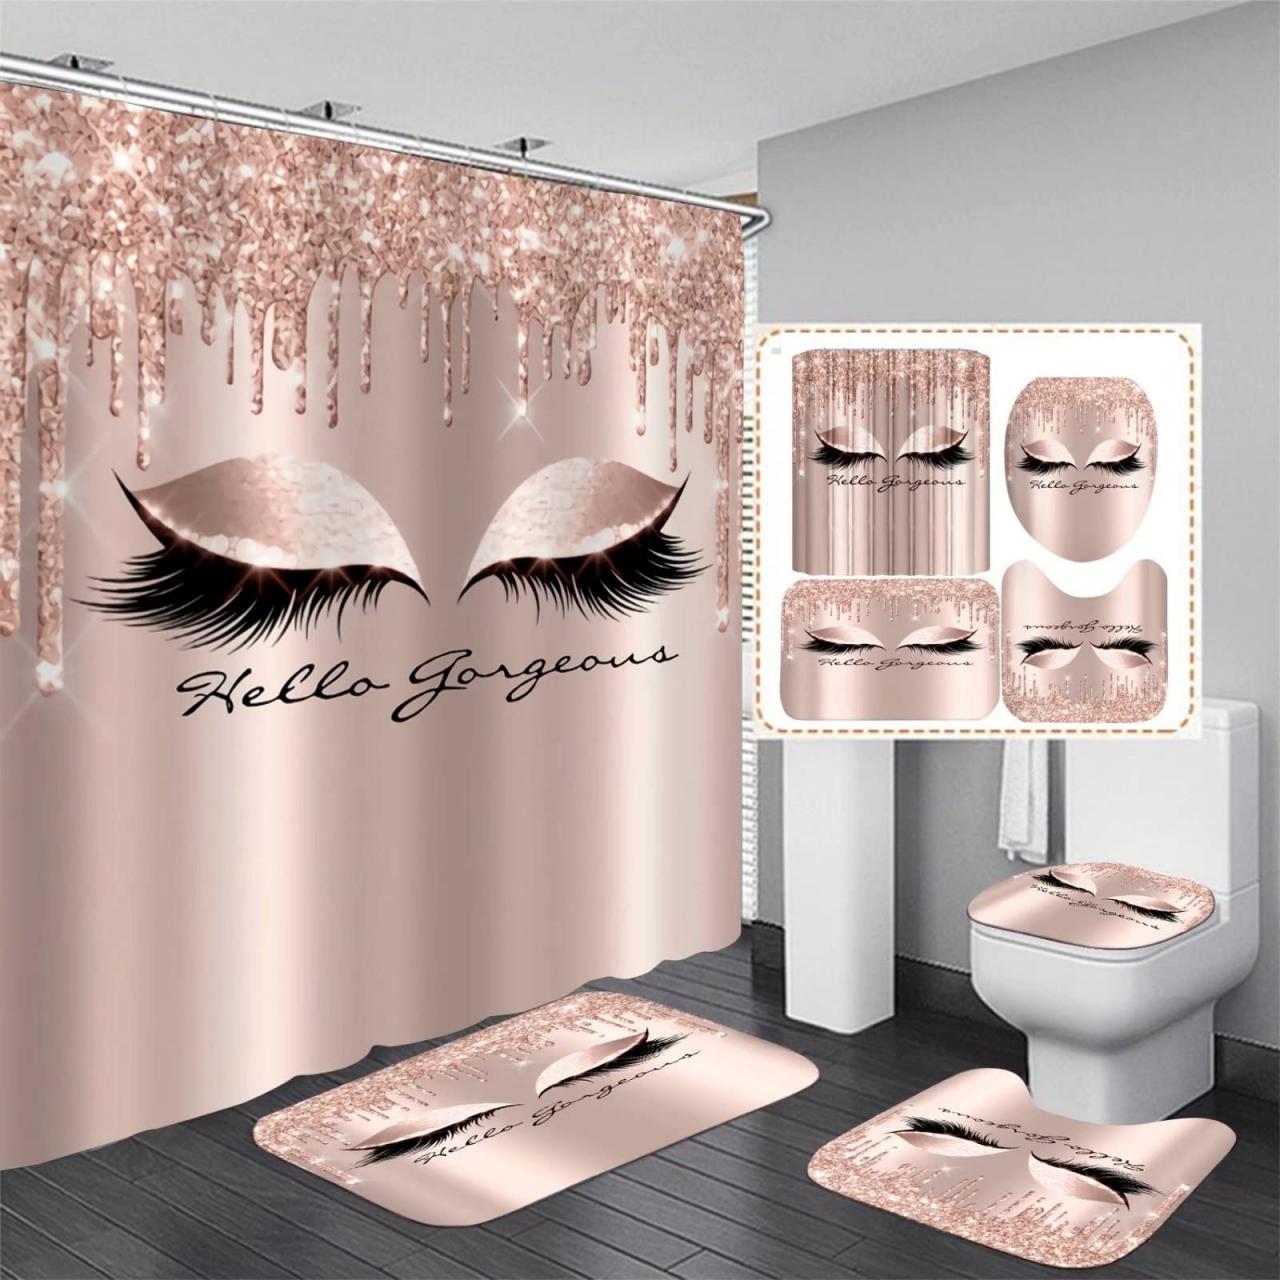 4pcs/set Pretty Eyelash Shower Curtain Spark Rose Gold Drips Hello Gorgeous Bathroom Decor Waterproof Cloth Polyester Bath Curtain Bathtub